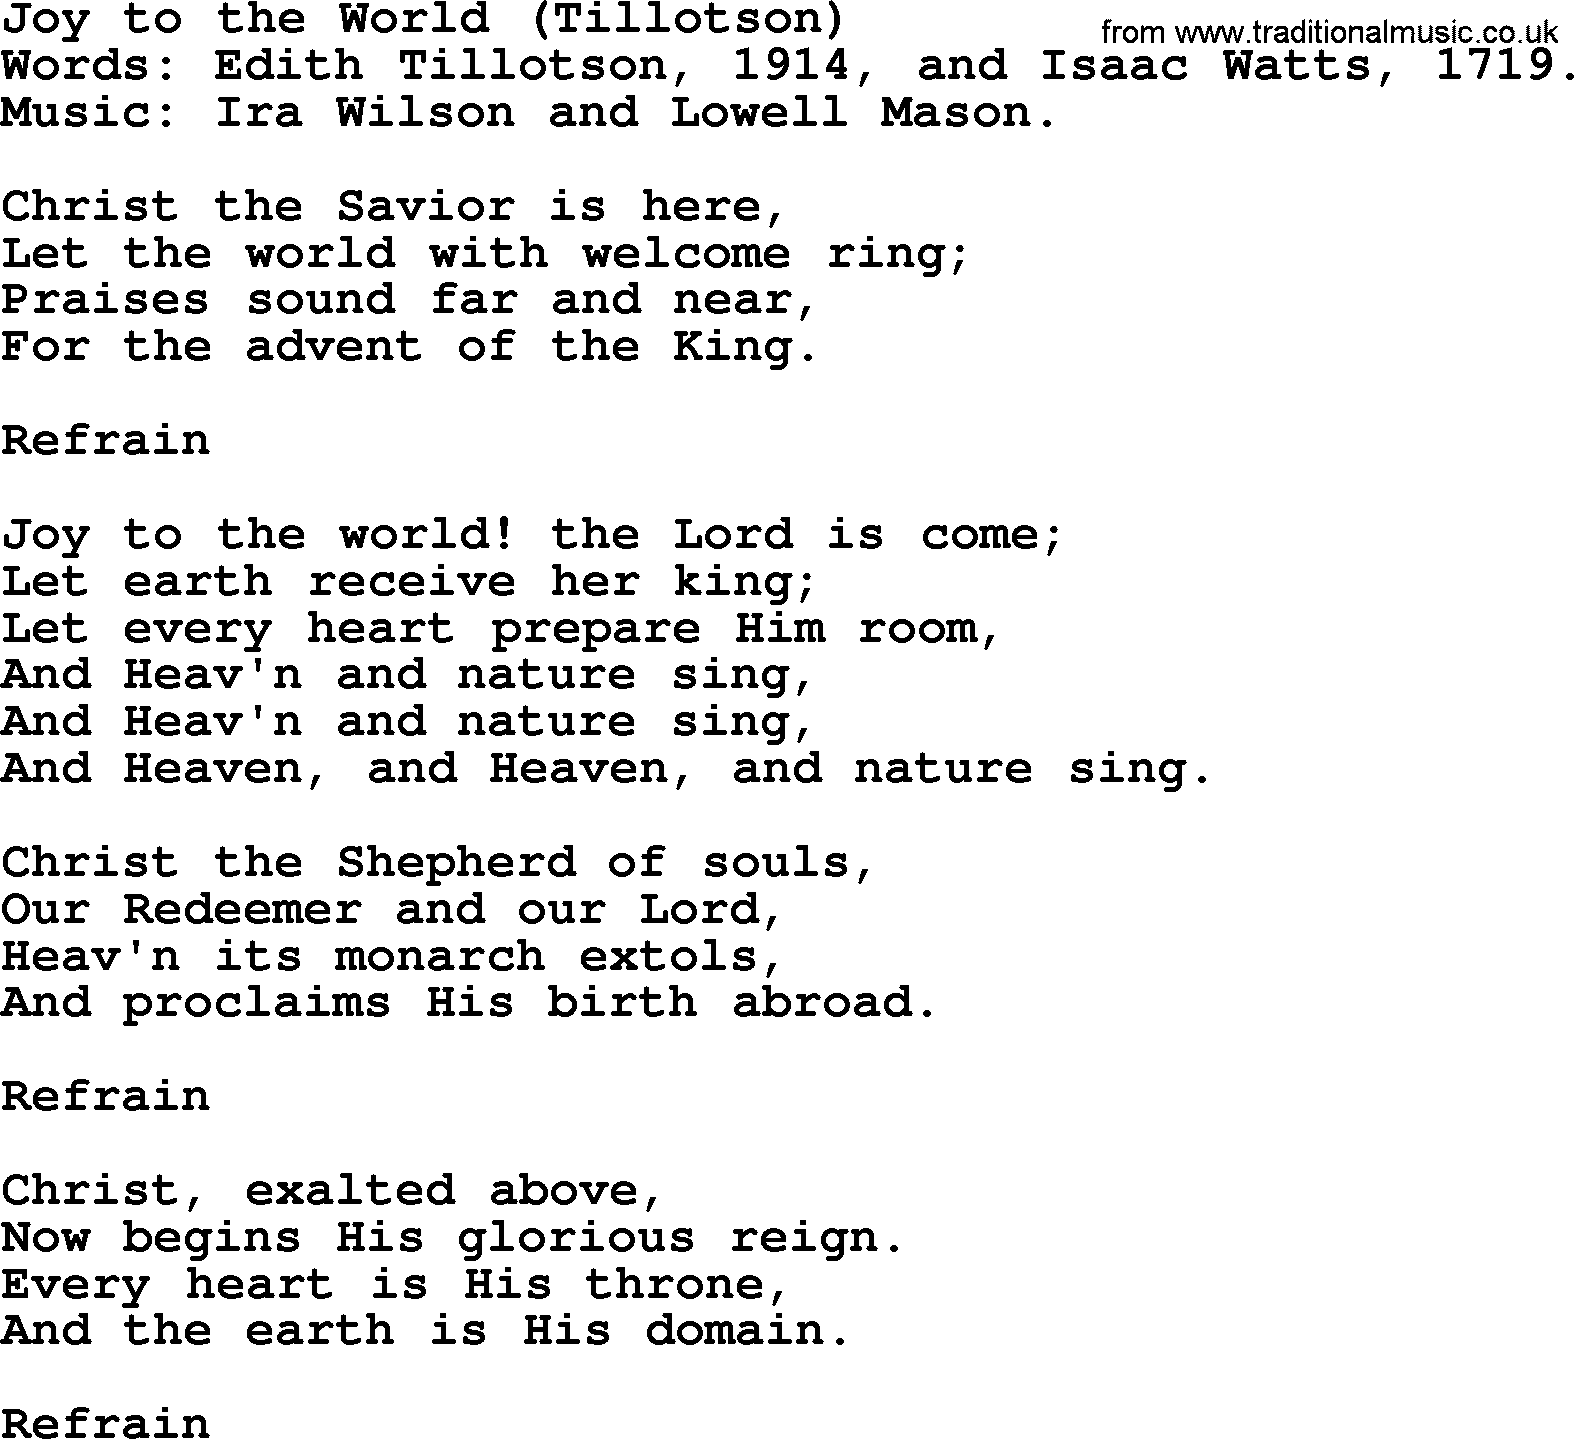 Christmas Hymns, Carols and Songs, title: Joy To The World (tillotson), lyrics with PDF